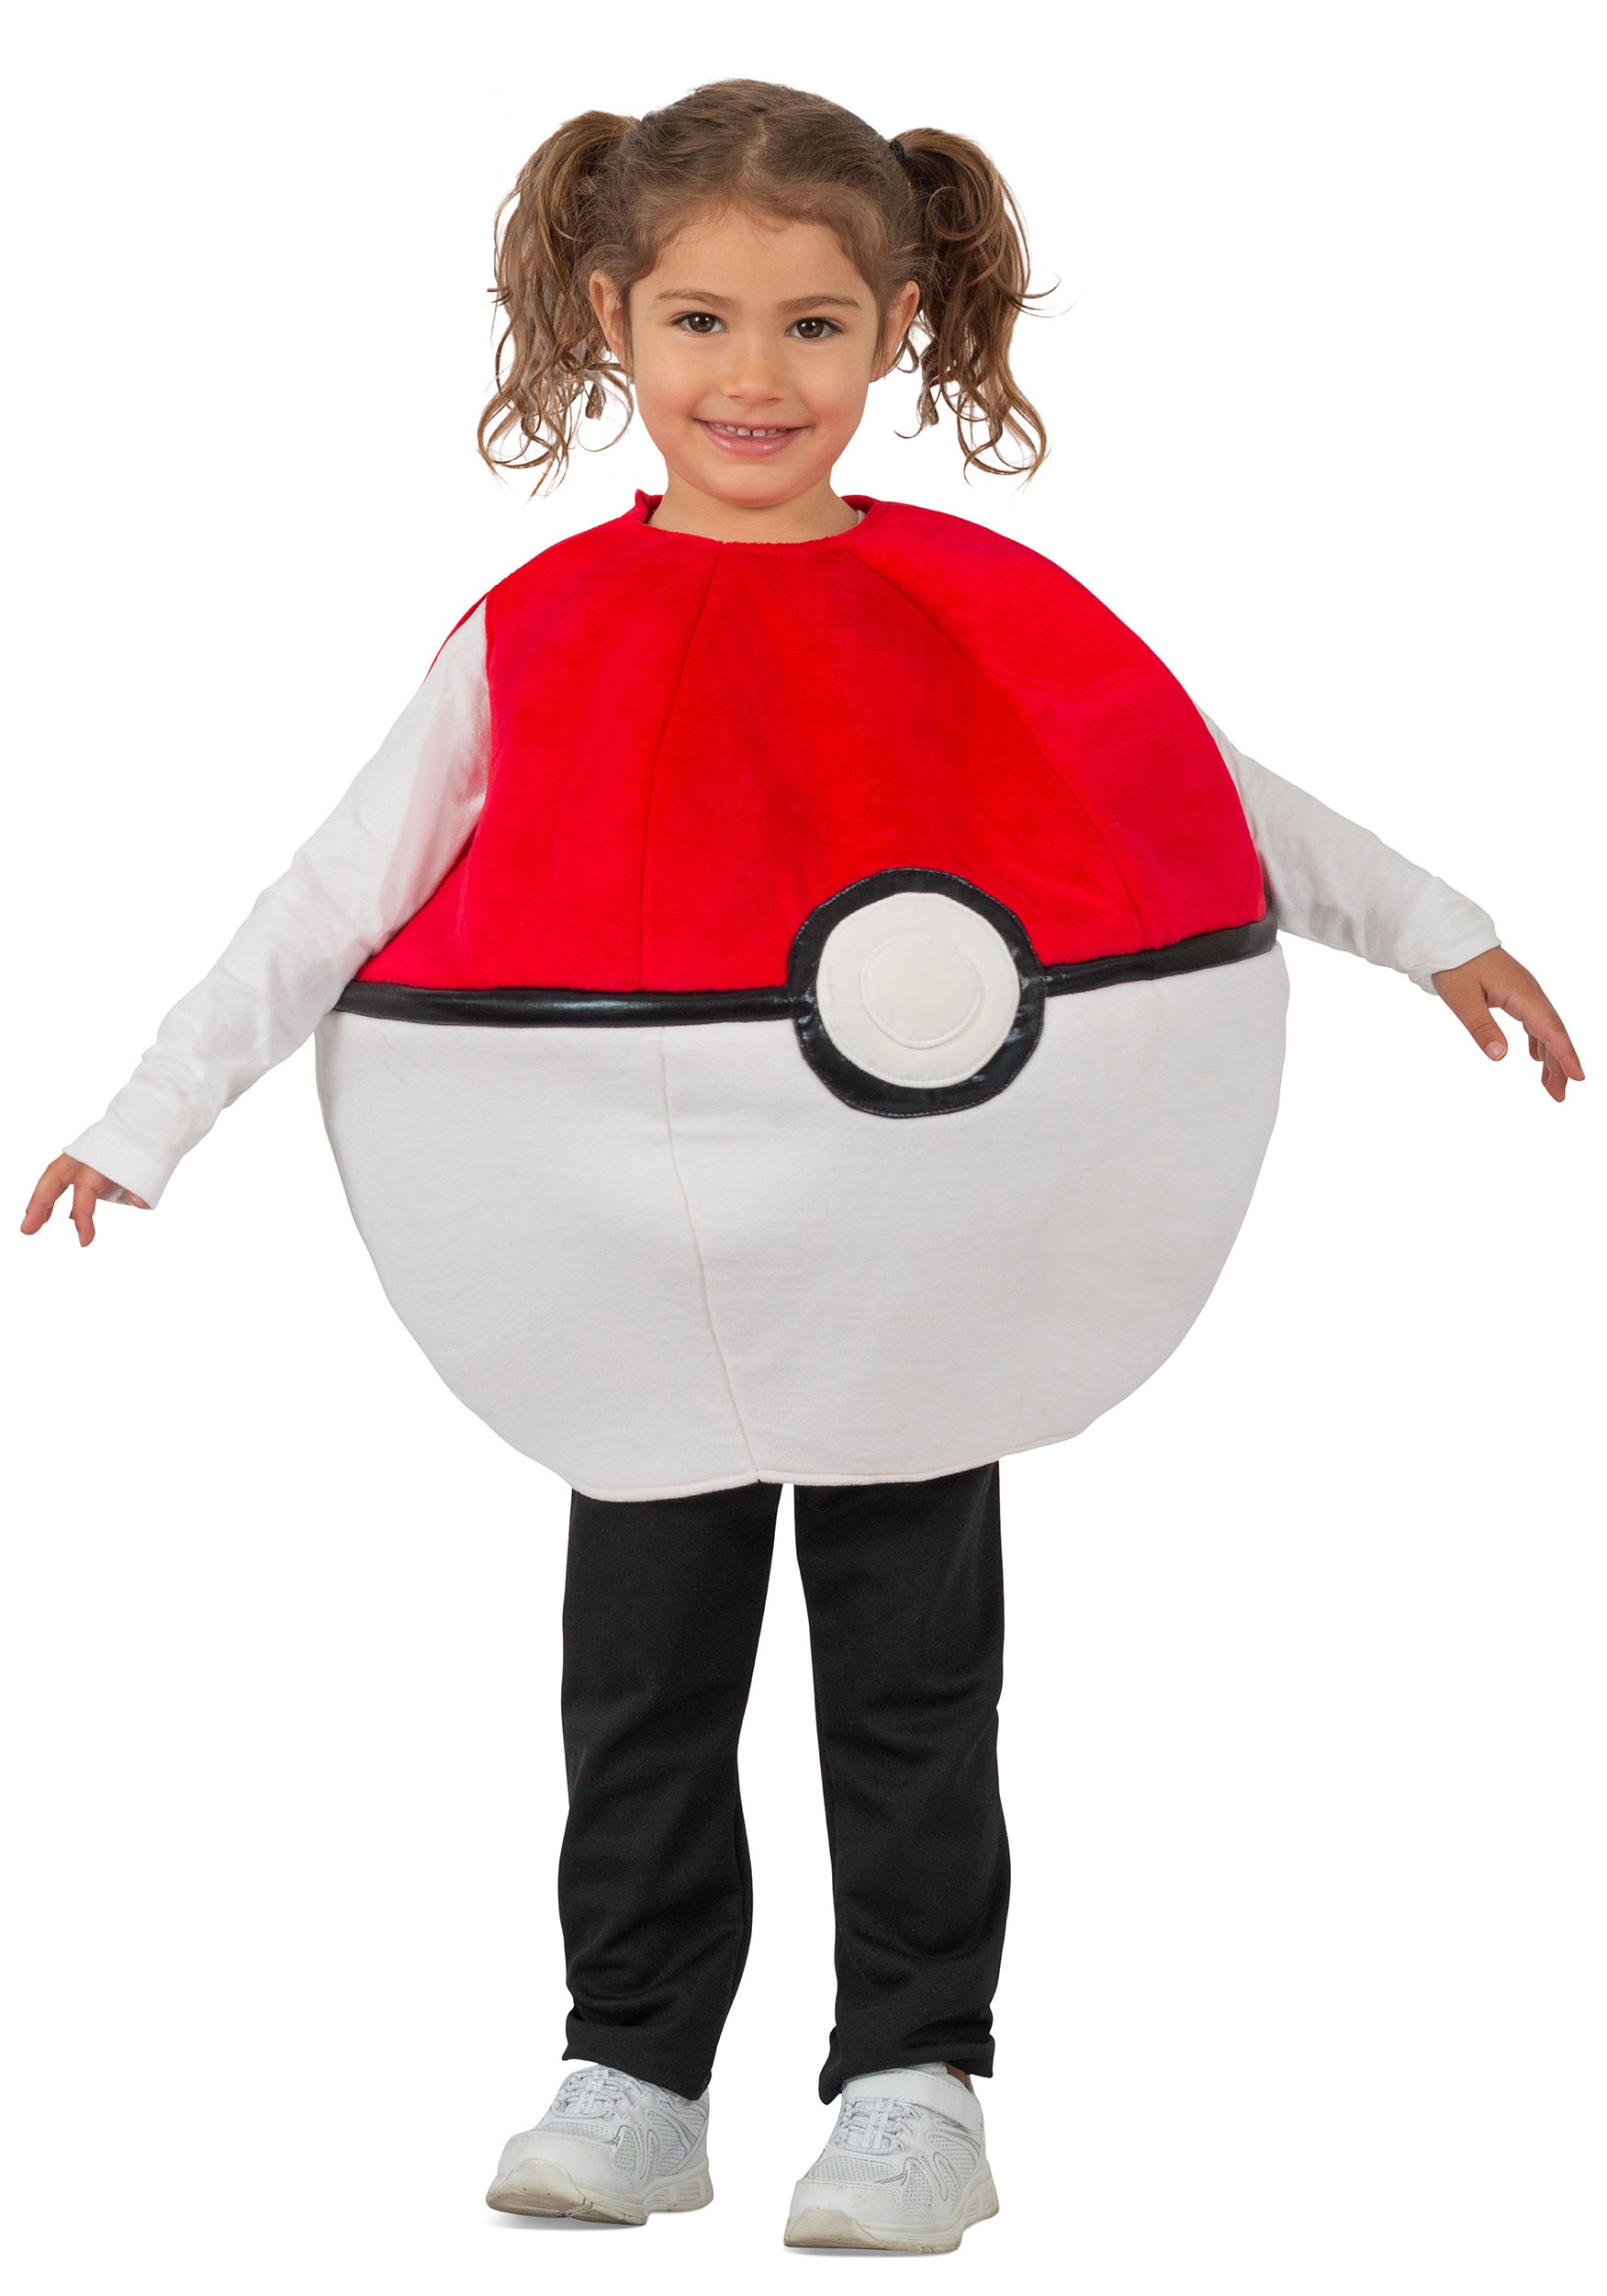 DIY Costumes For Toddlers
 Pokemon Pokeball Costume for Kids